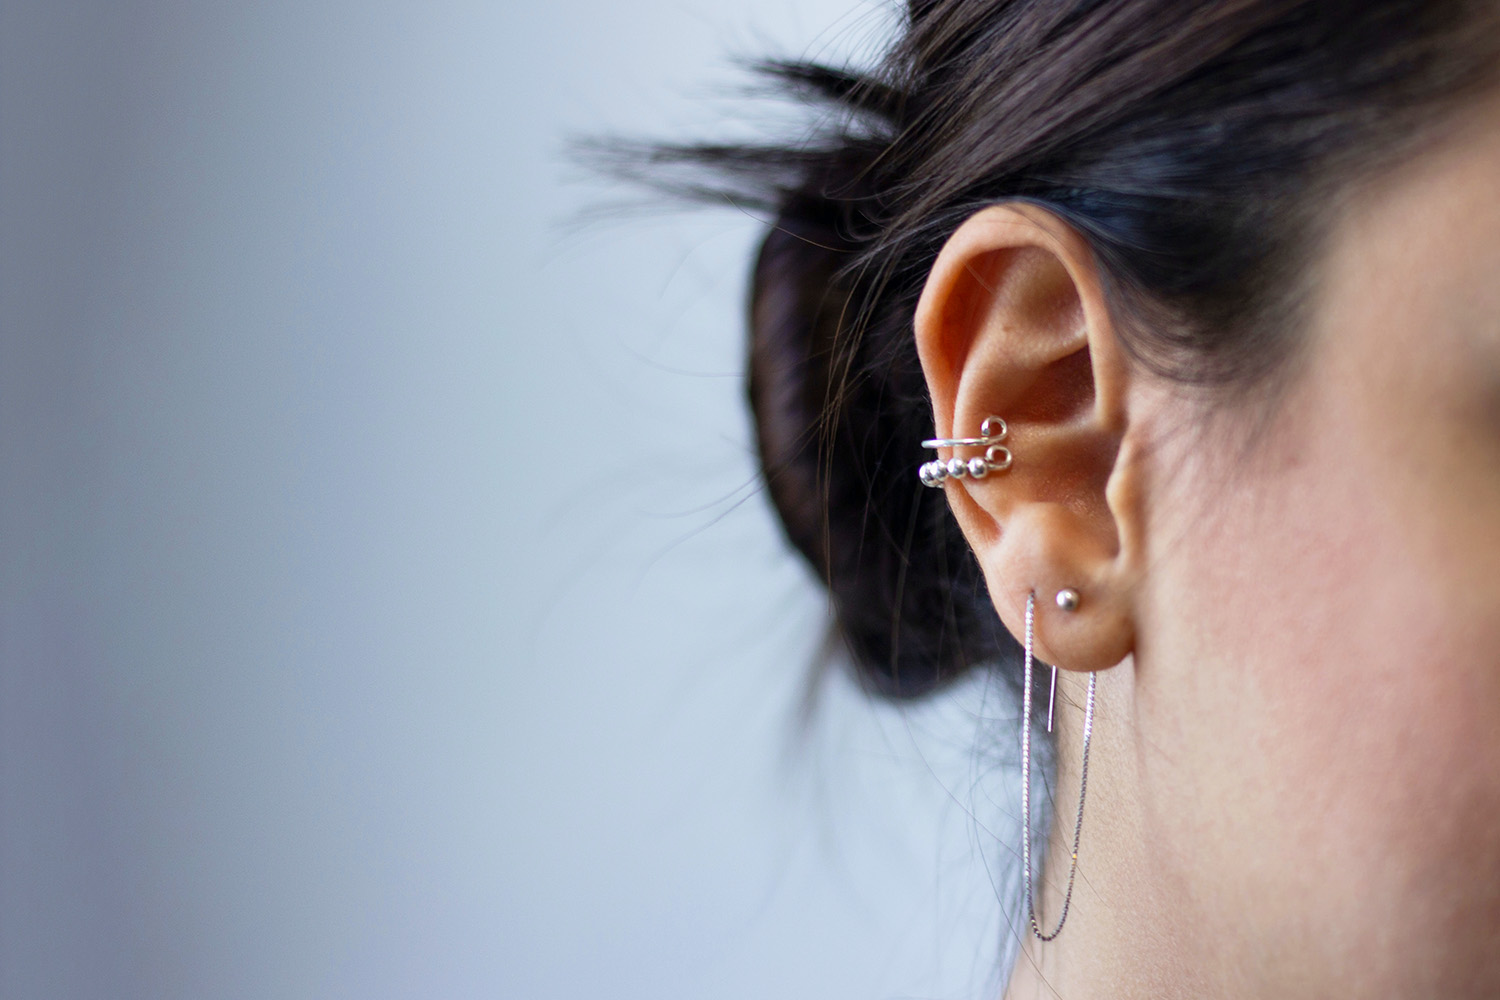 Silver earrings by Kimia Zarifi via Unsplash